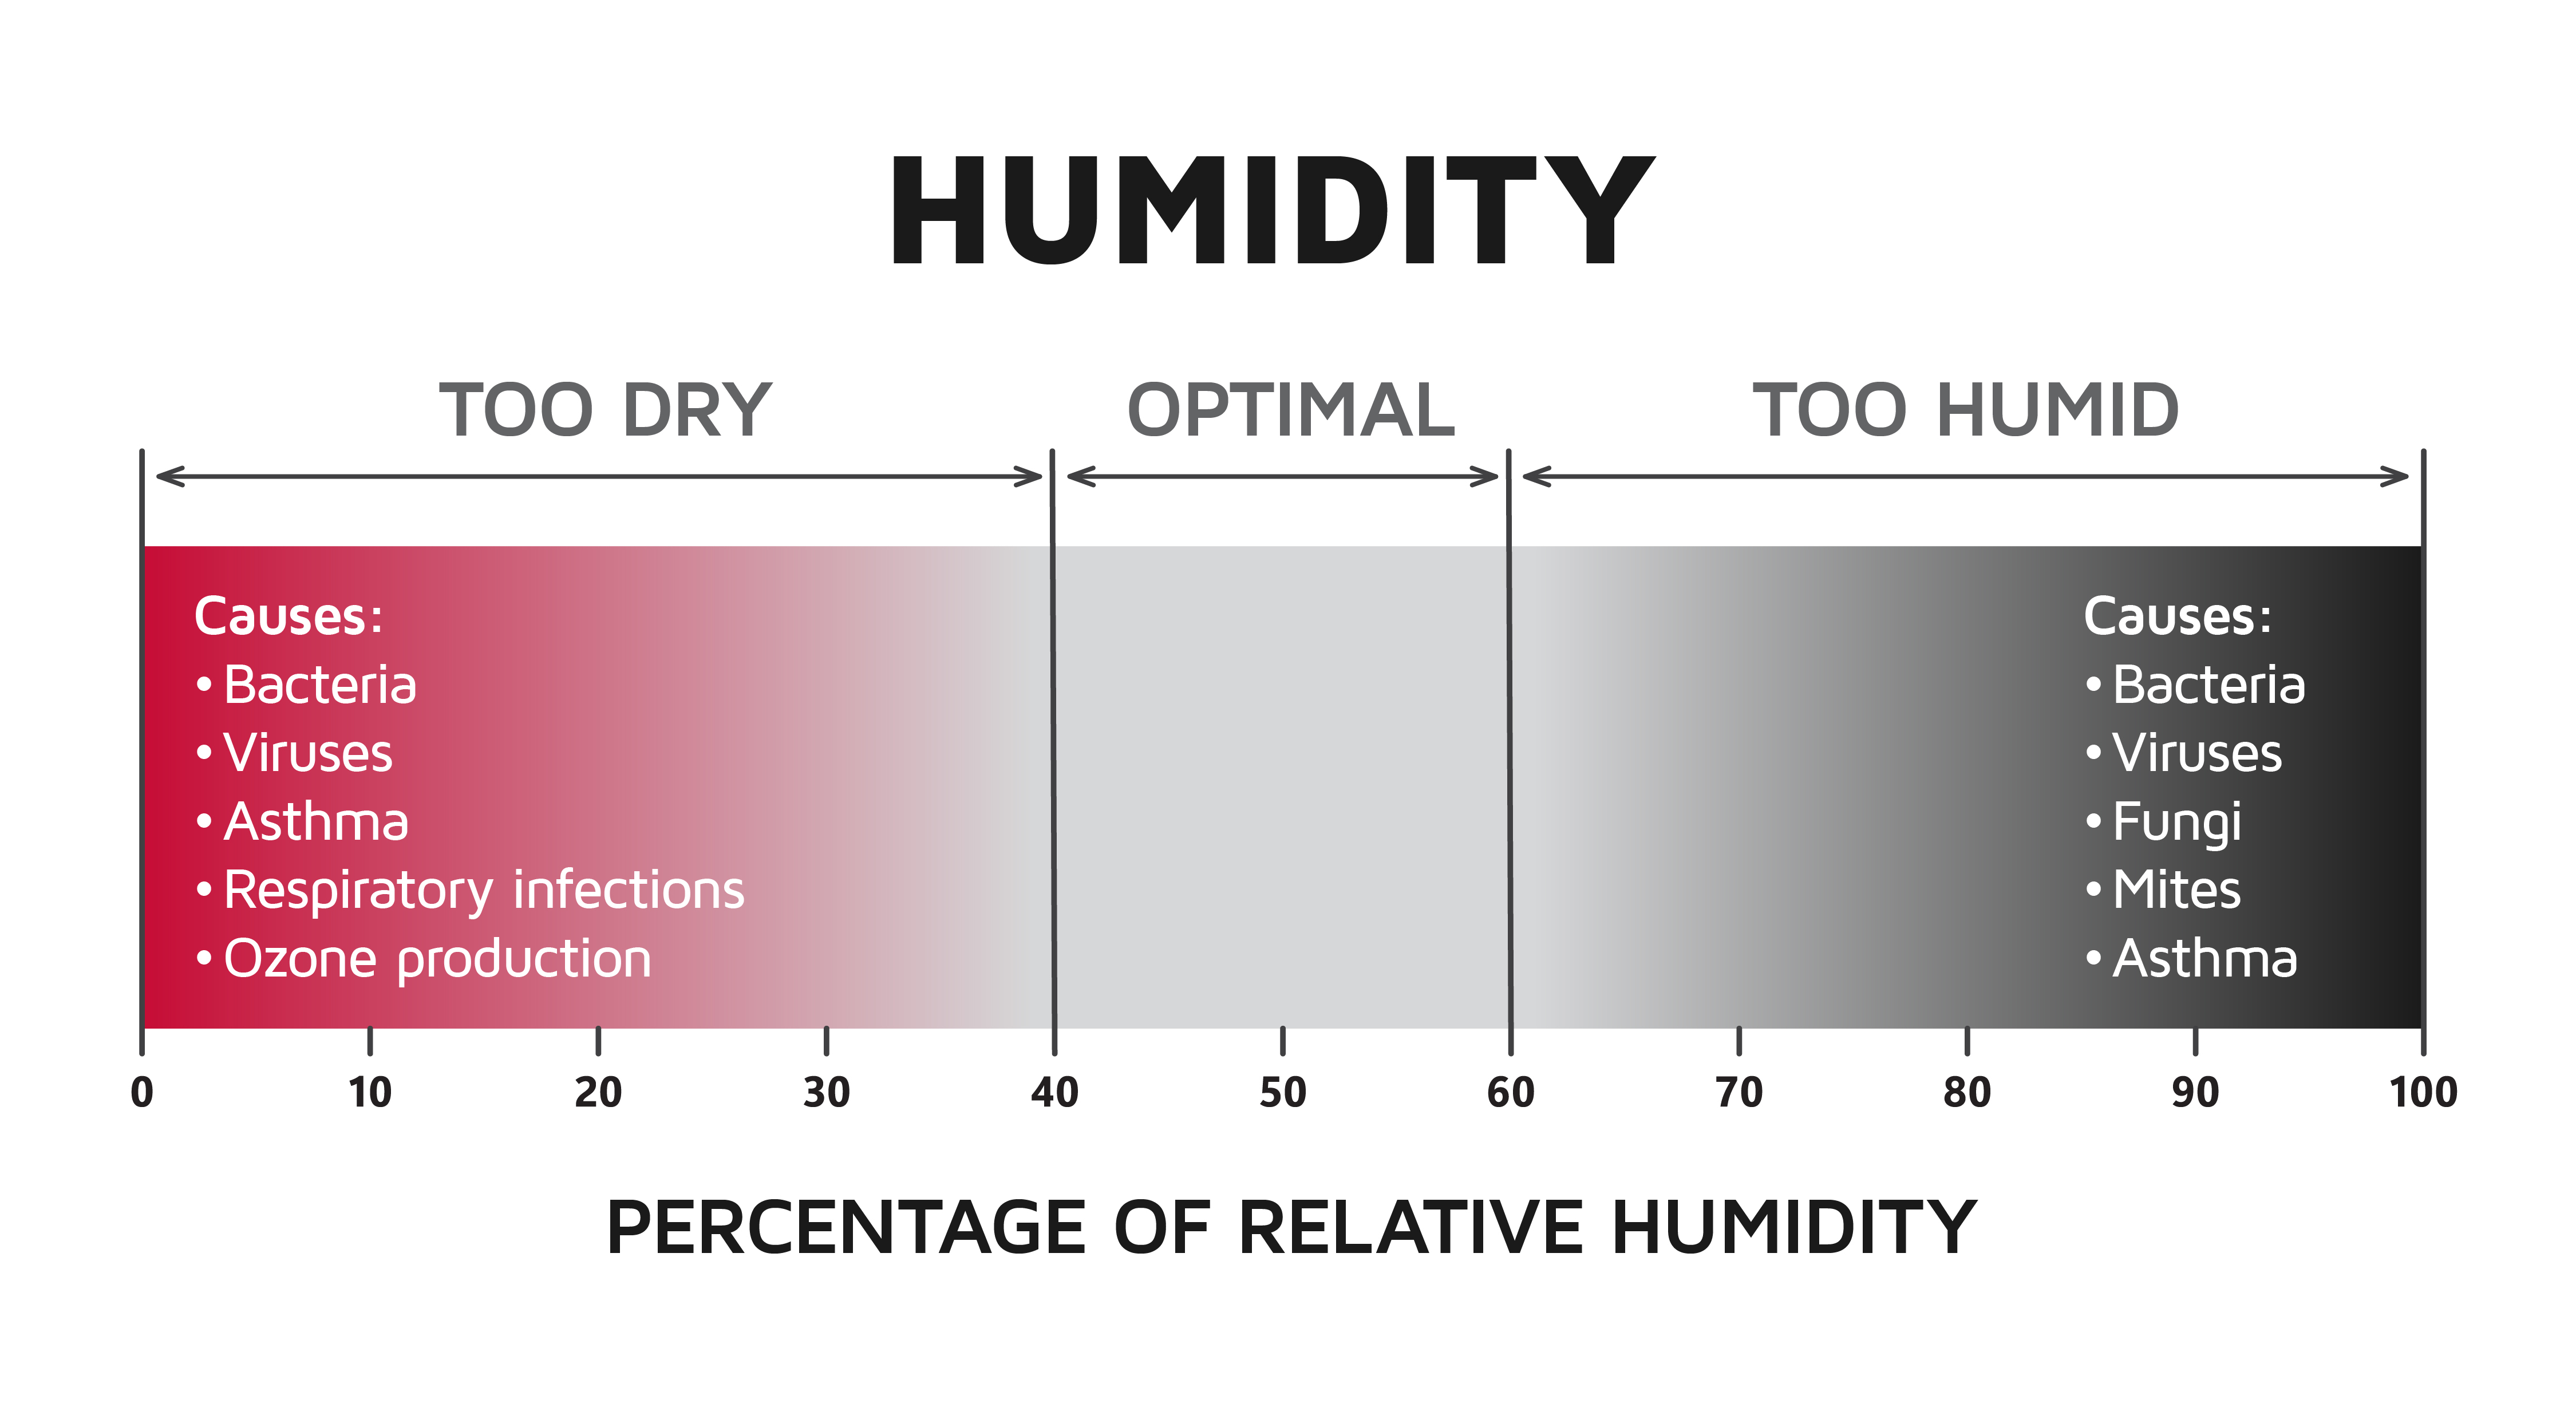 Optimum relative humidity for health